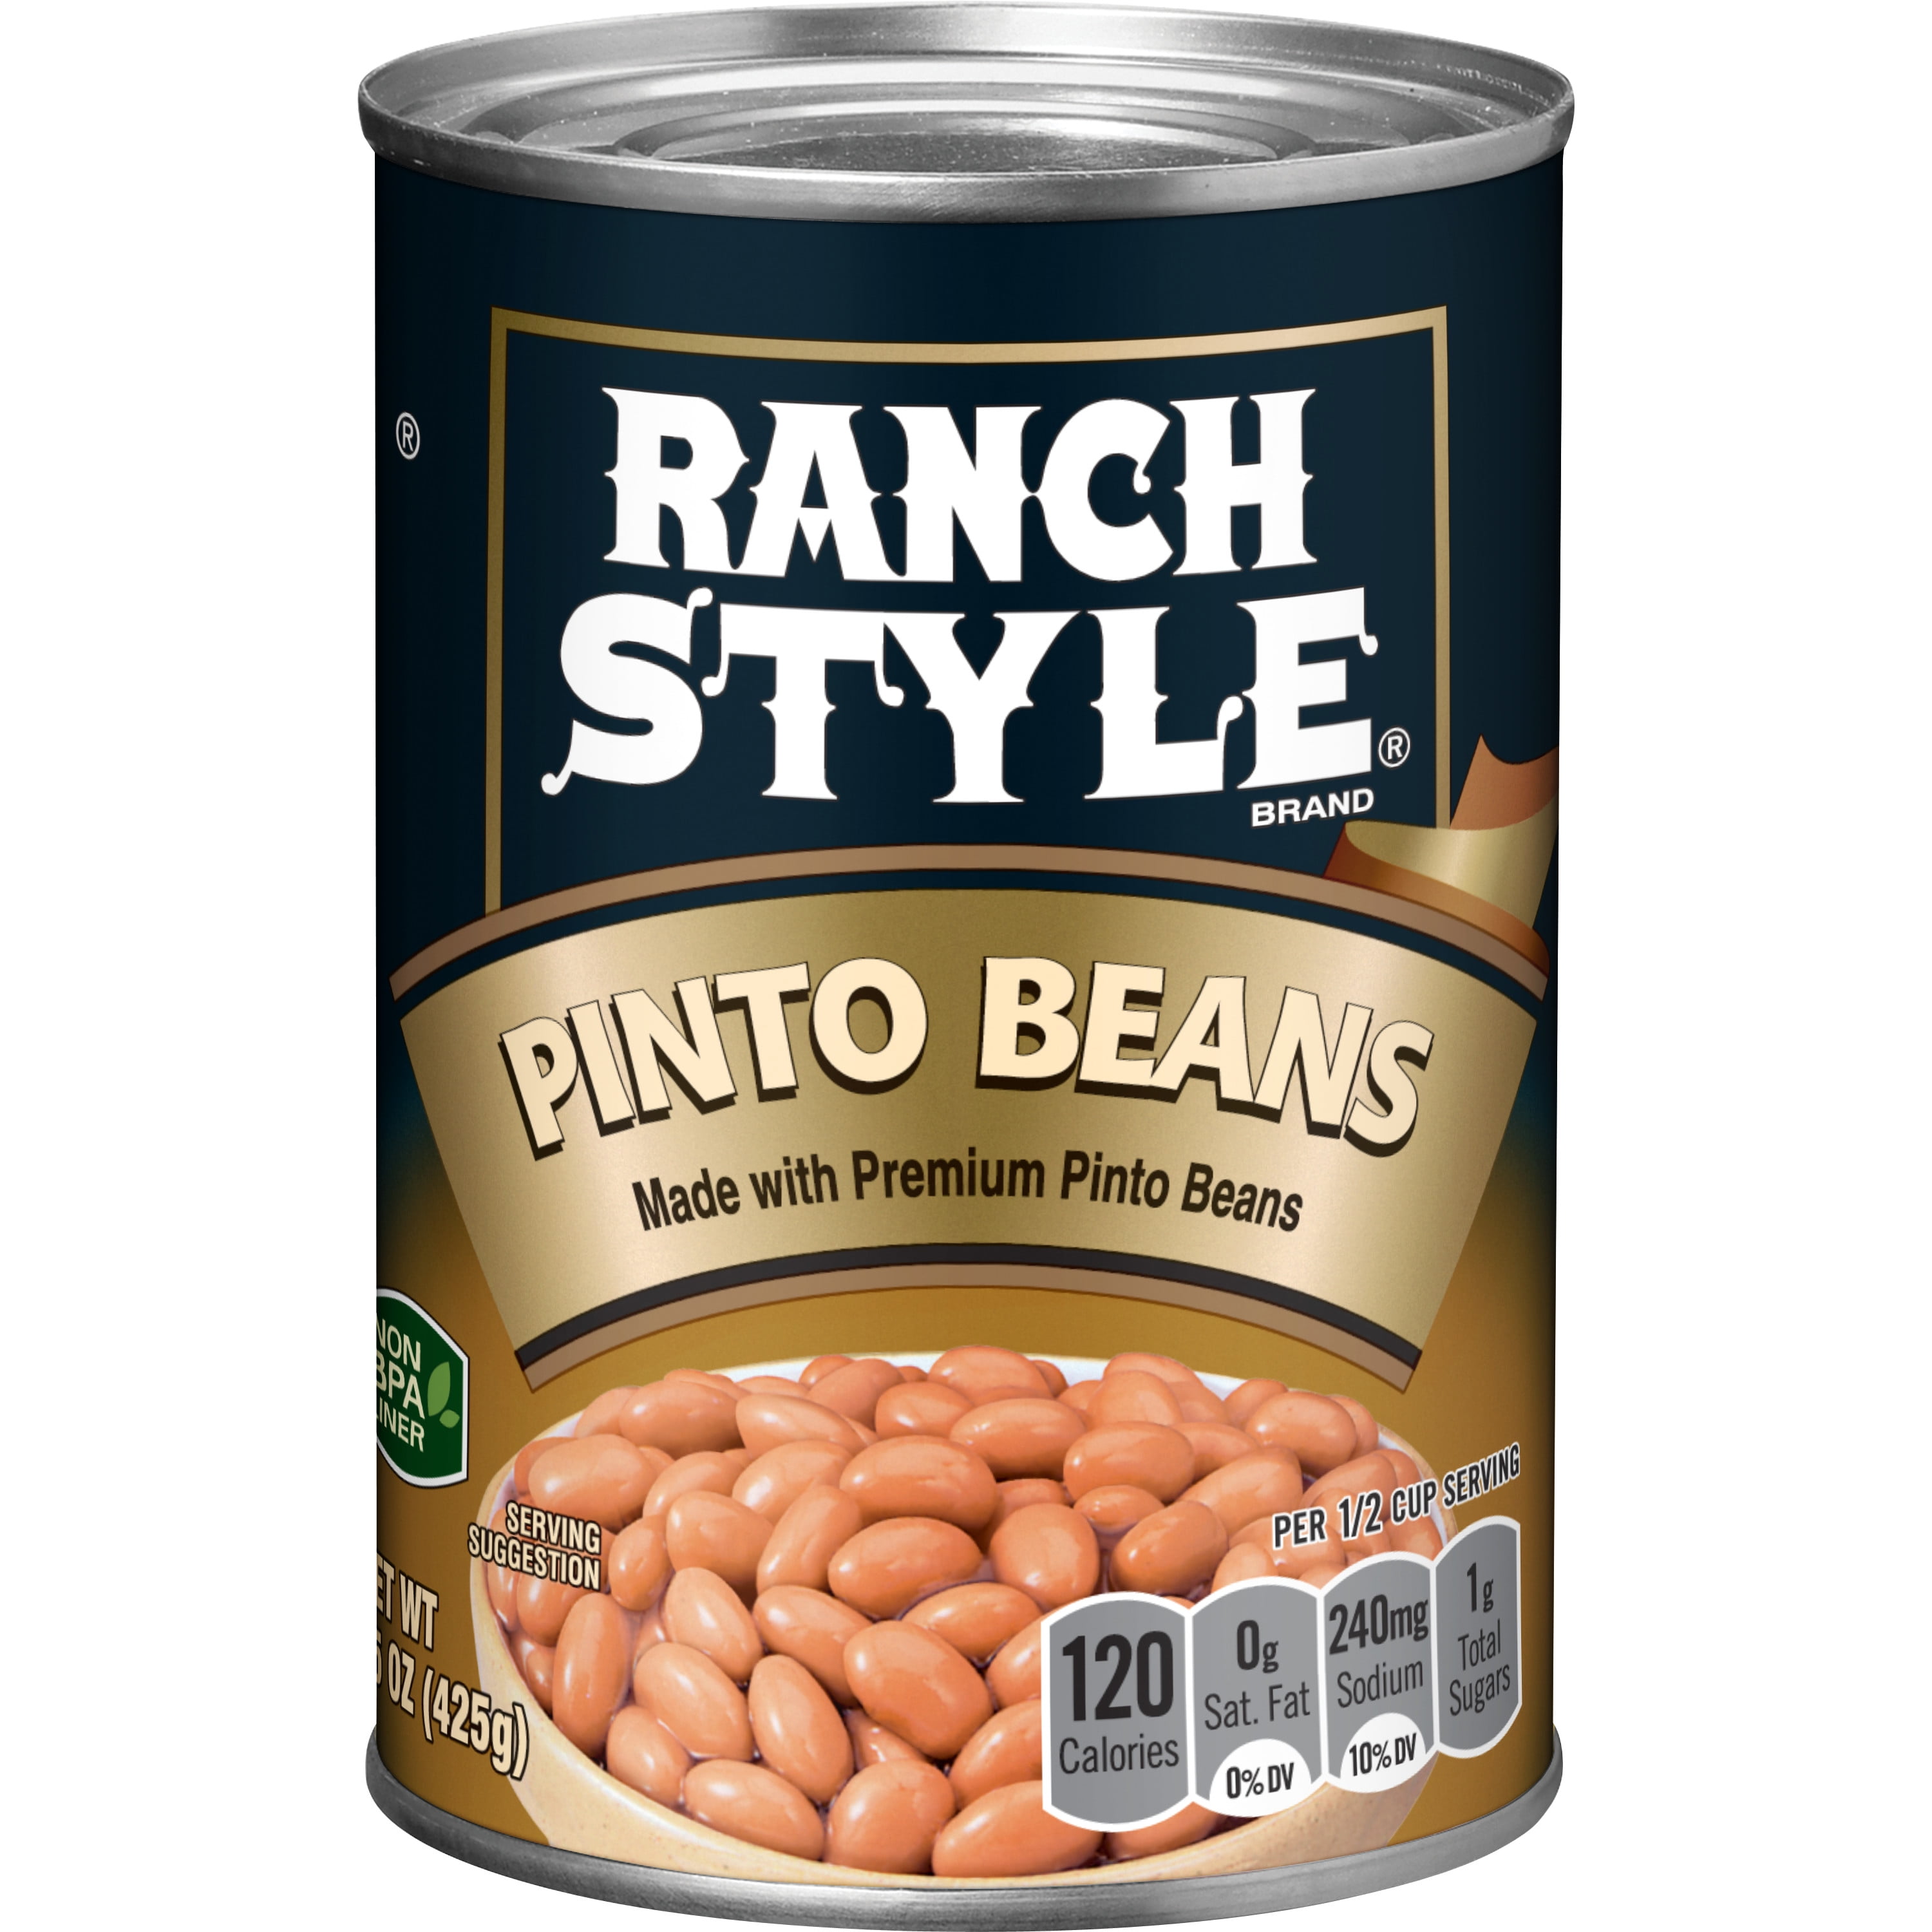 Ranch Style Premium Pinto Beans, Canned Beans, 15 oz - Walmart.com